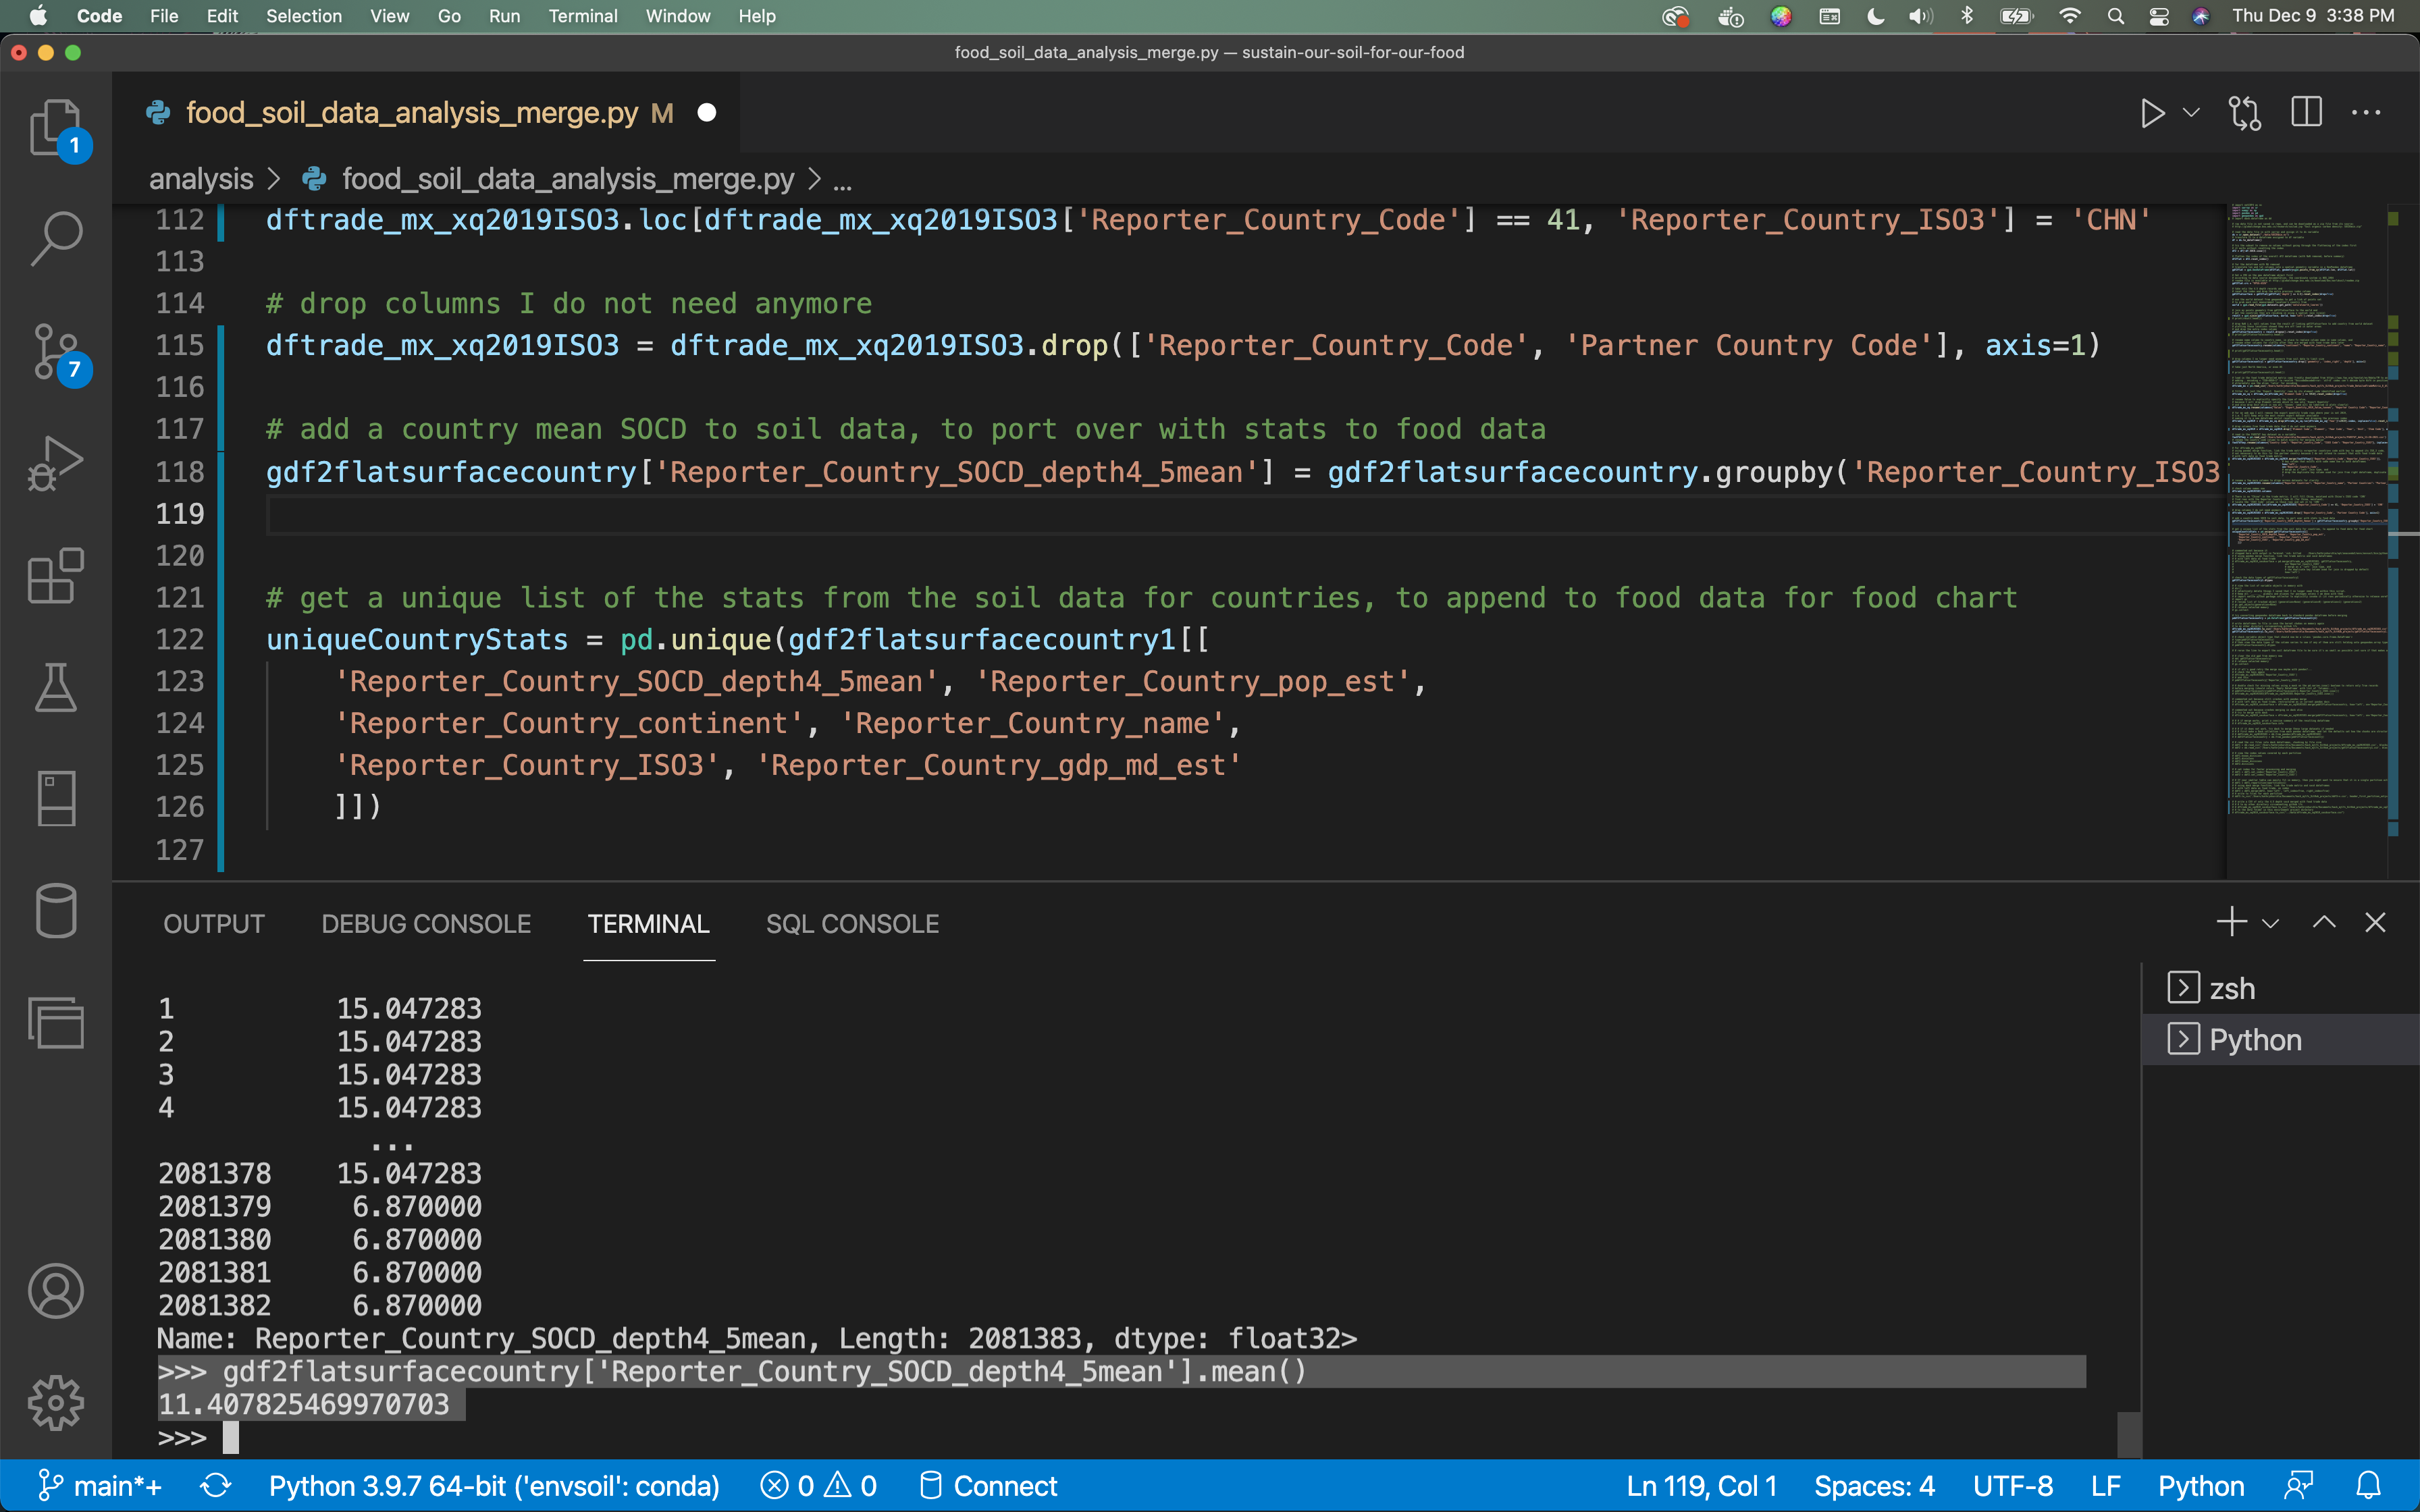 screenshot taken in an integrated development environment showing Python computer programming code.